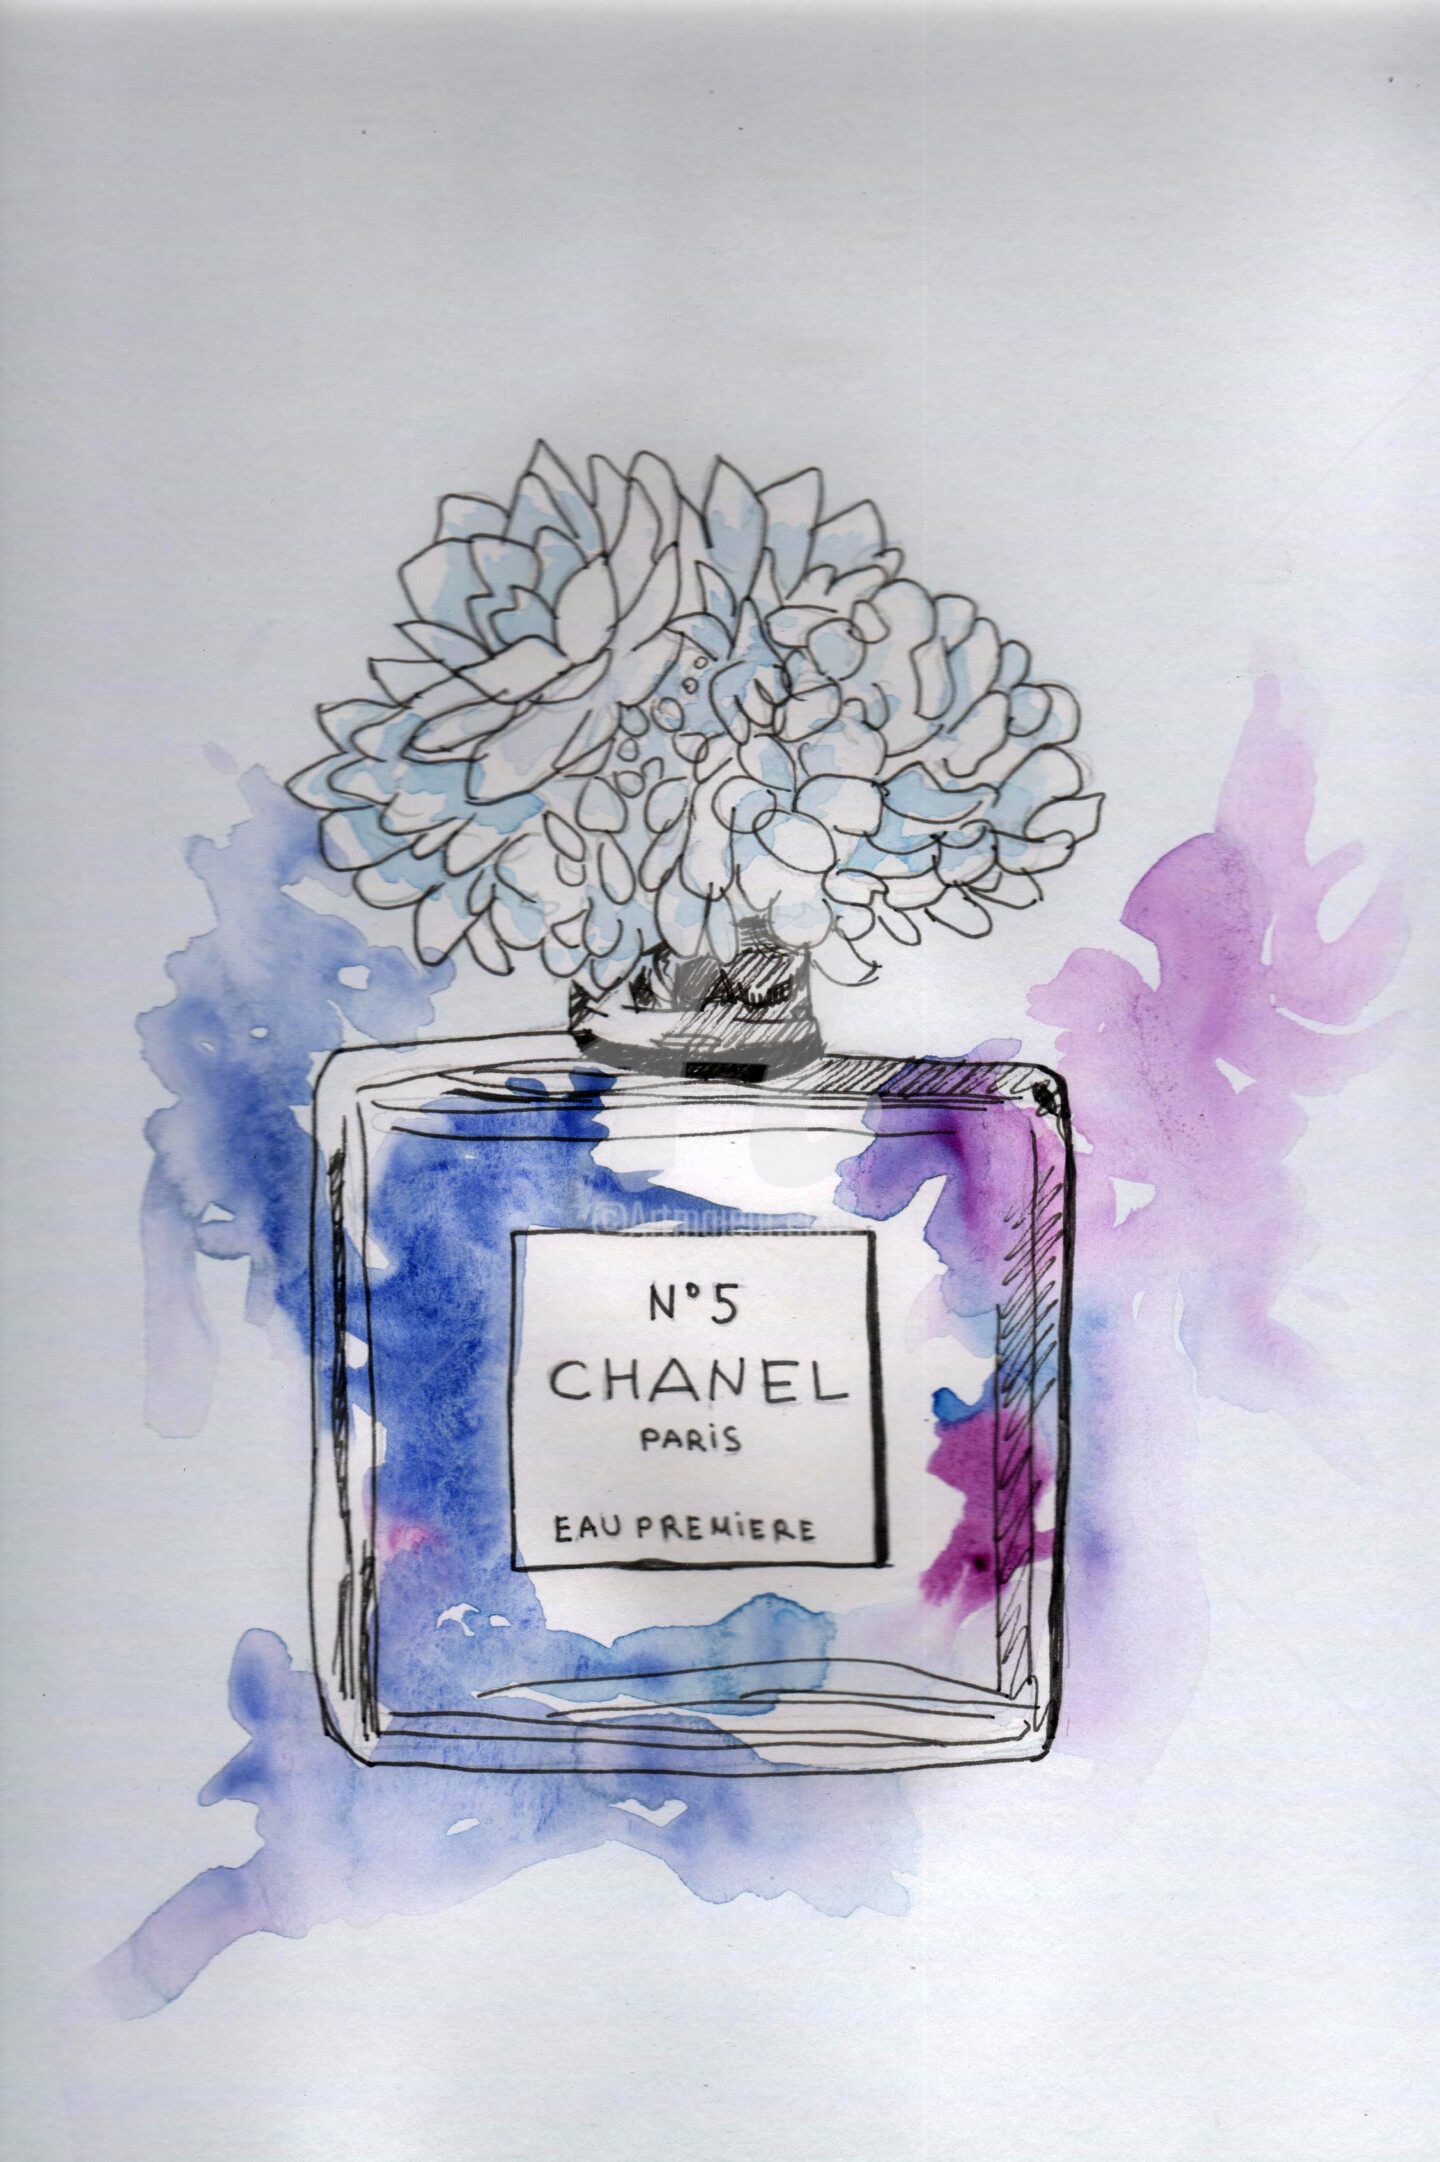 Coco chanel perfume Drawing by Katwrina Golban